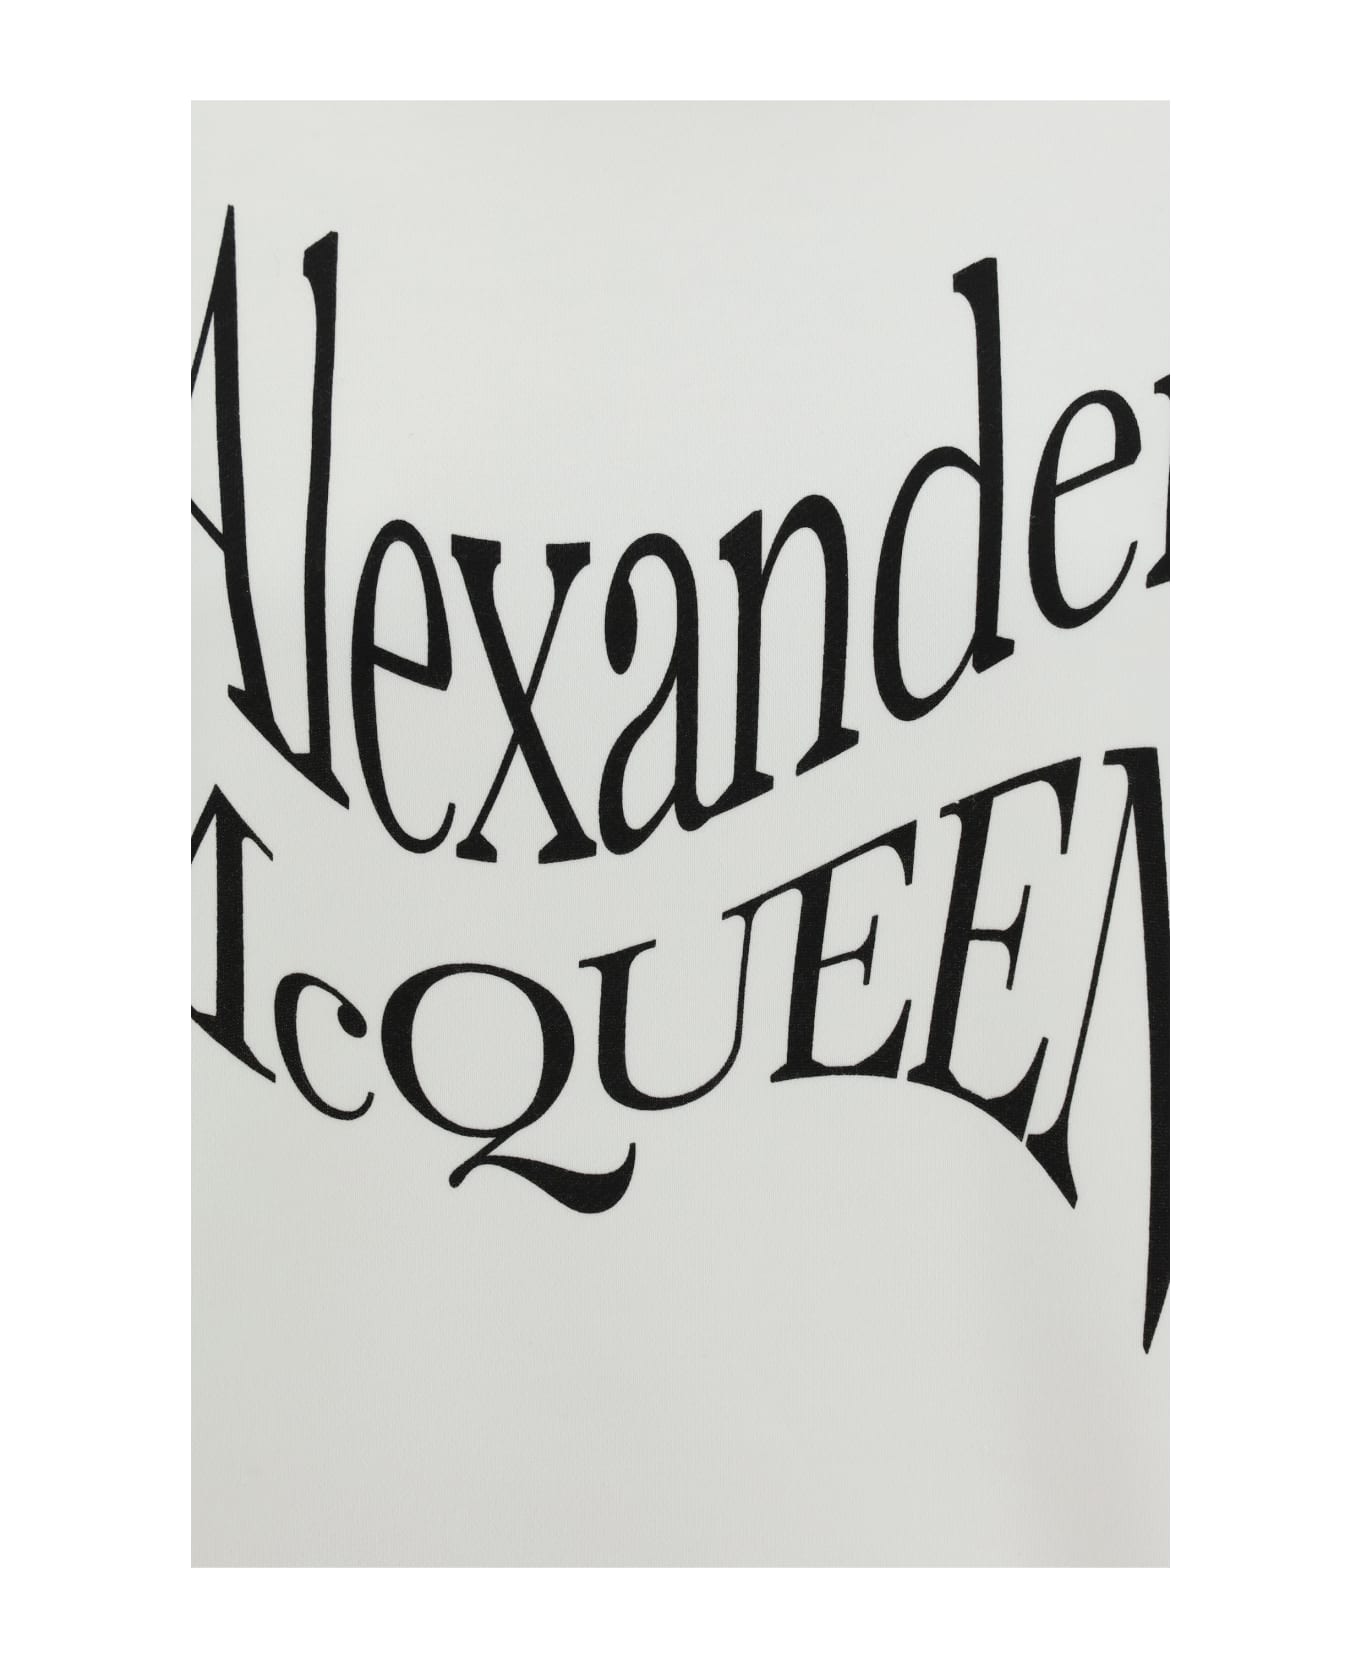 Alexander McQueen Sweatshirt - White